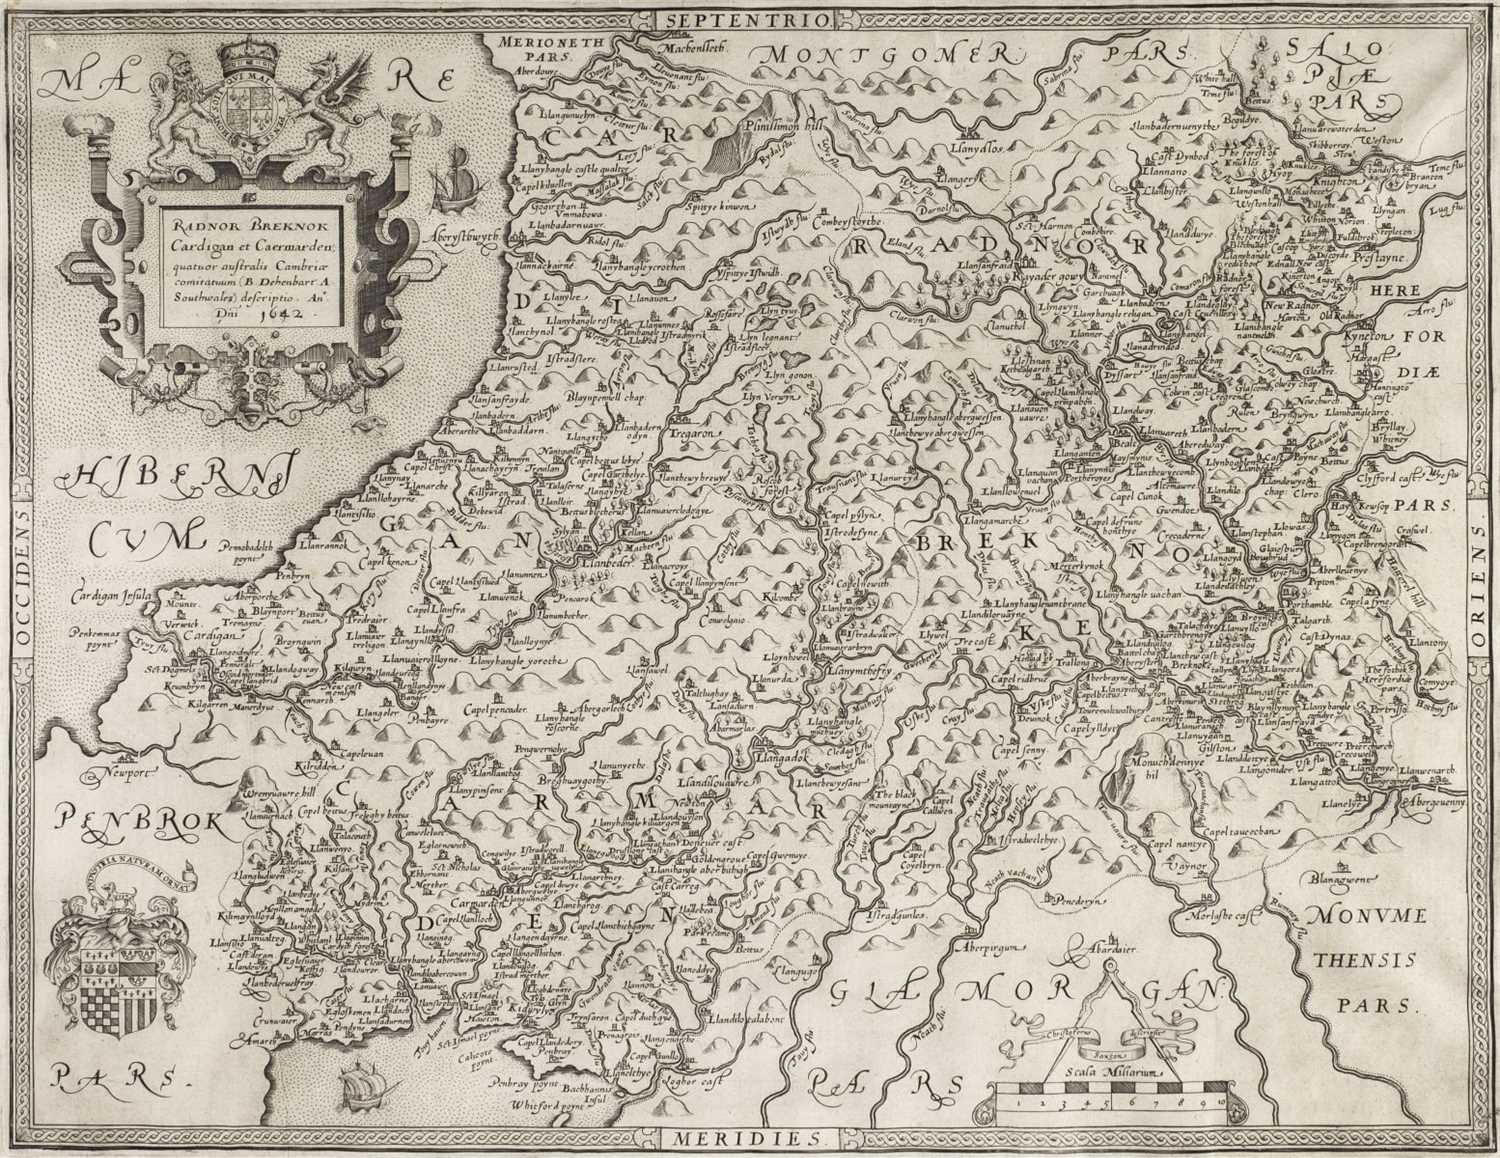 Lot 56 - Wales. Saxton (Christopher & Webb William), Radnor, Breknock Cardigan et Caermarden..., 1642